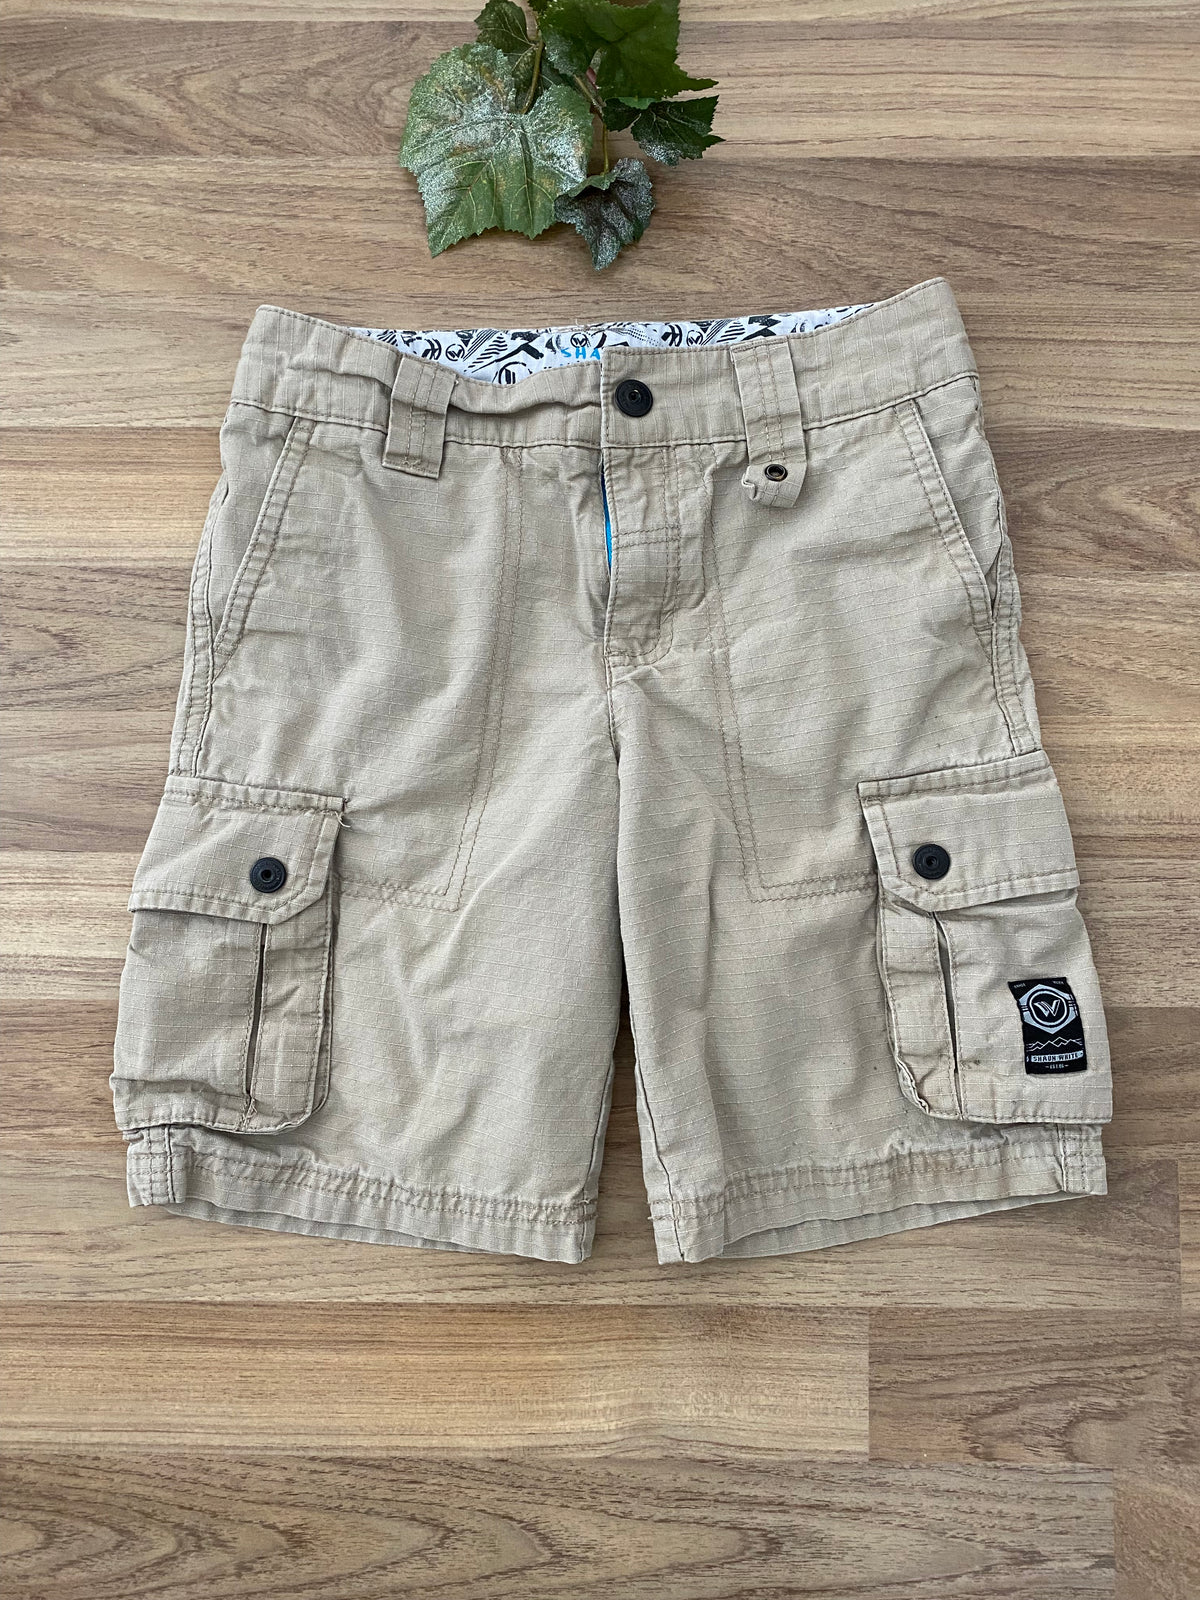 Shorts (Boys Size 8)